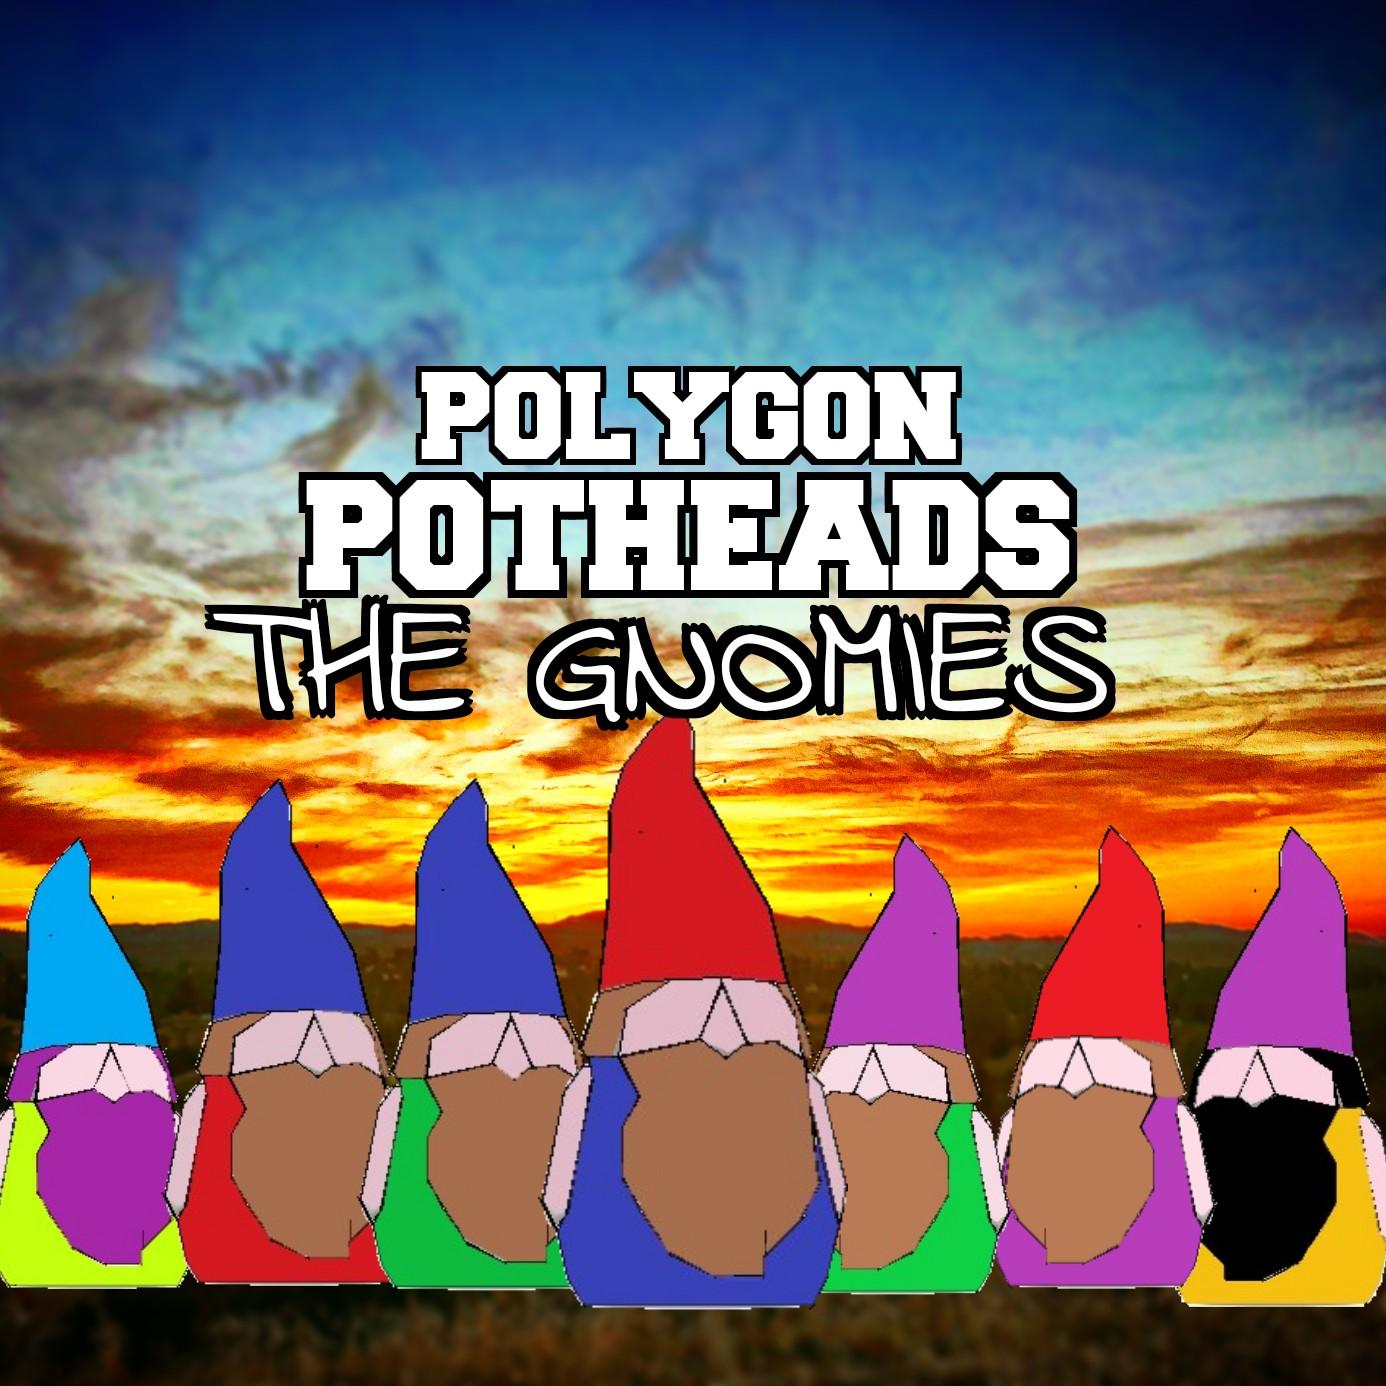 Polygon_potheads banner